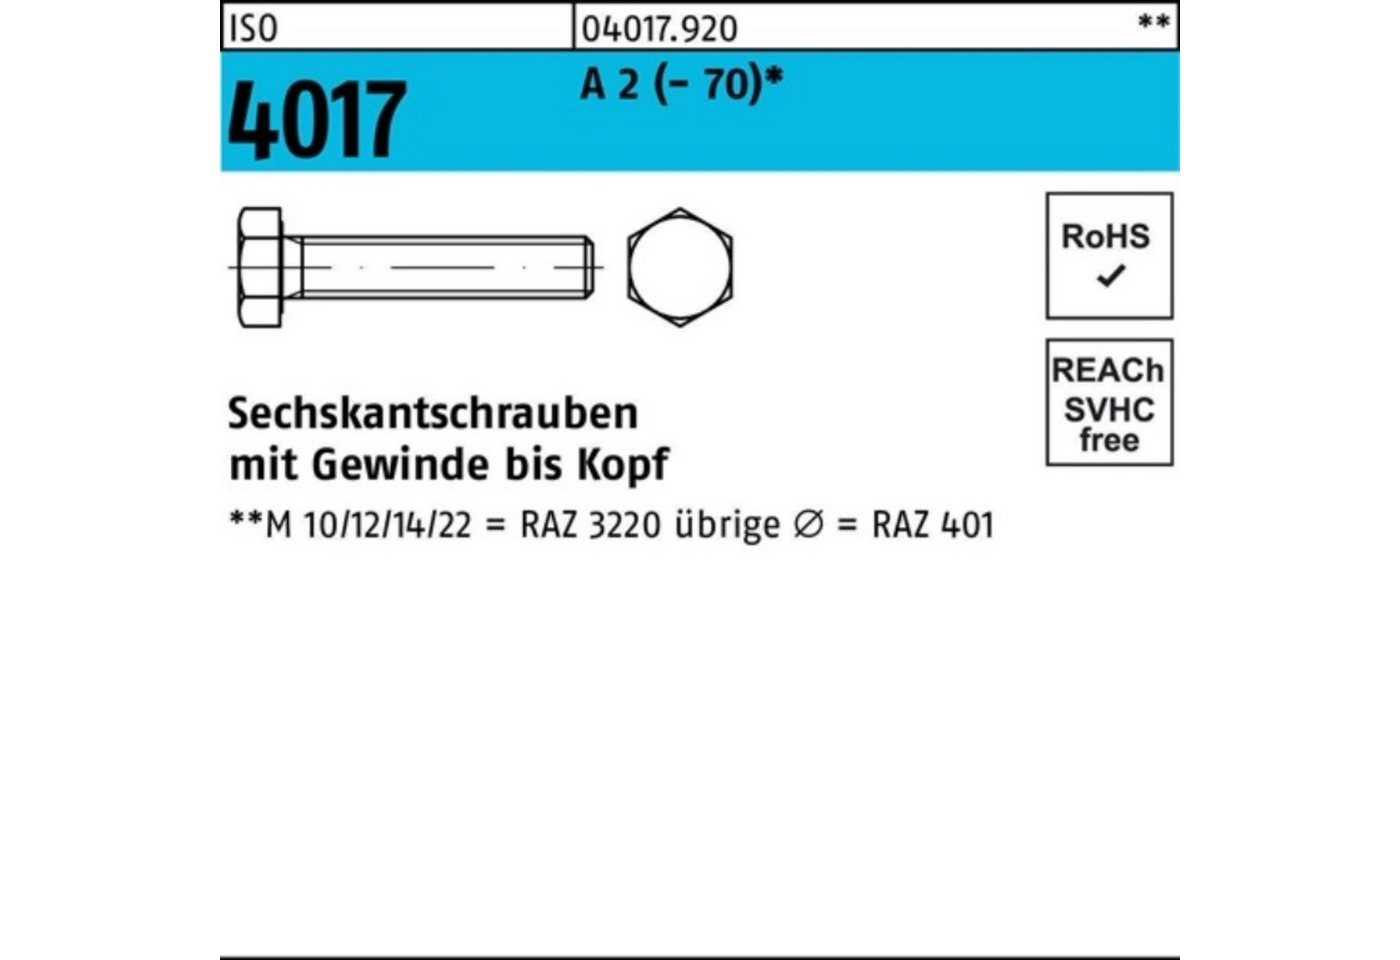 Bufab Sechskantschraube 100er Pack Sechskantschraube ISO 4017 VG M24x 55 A 2 (70) 10 Stück von Bufab